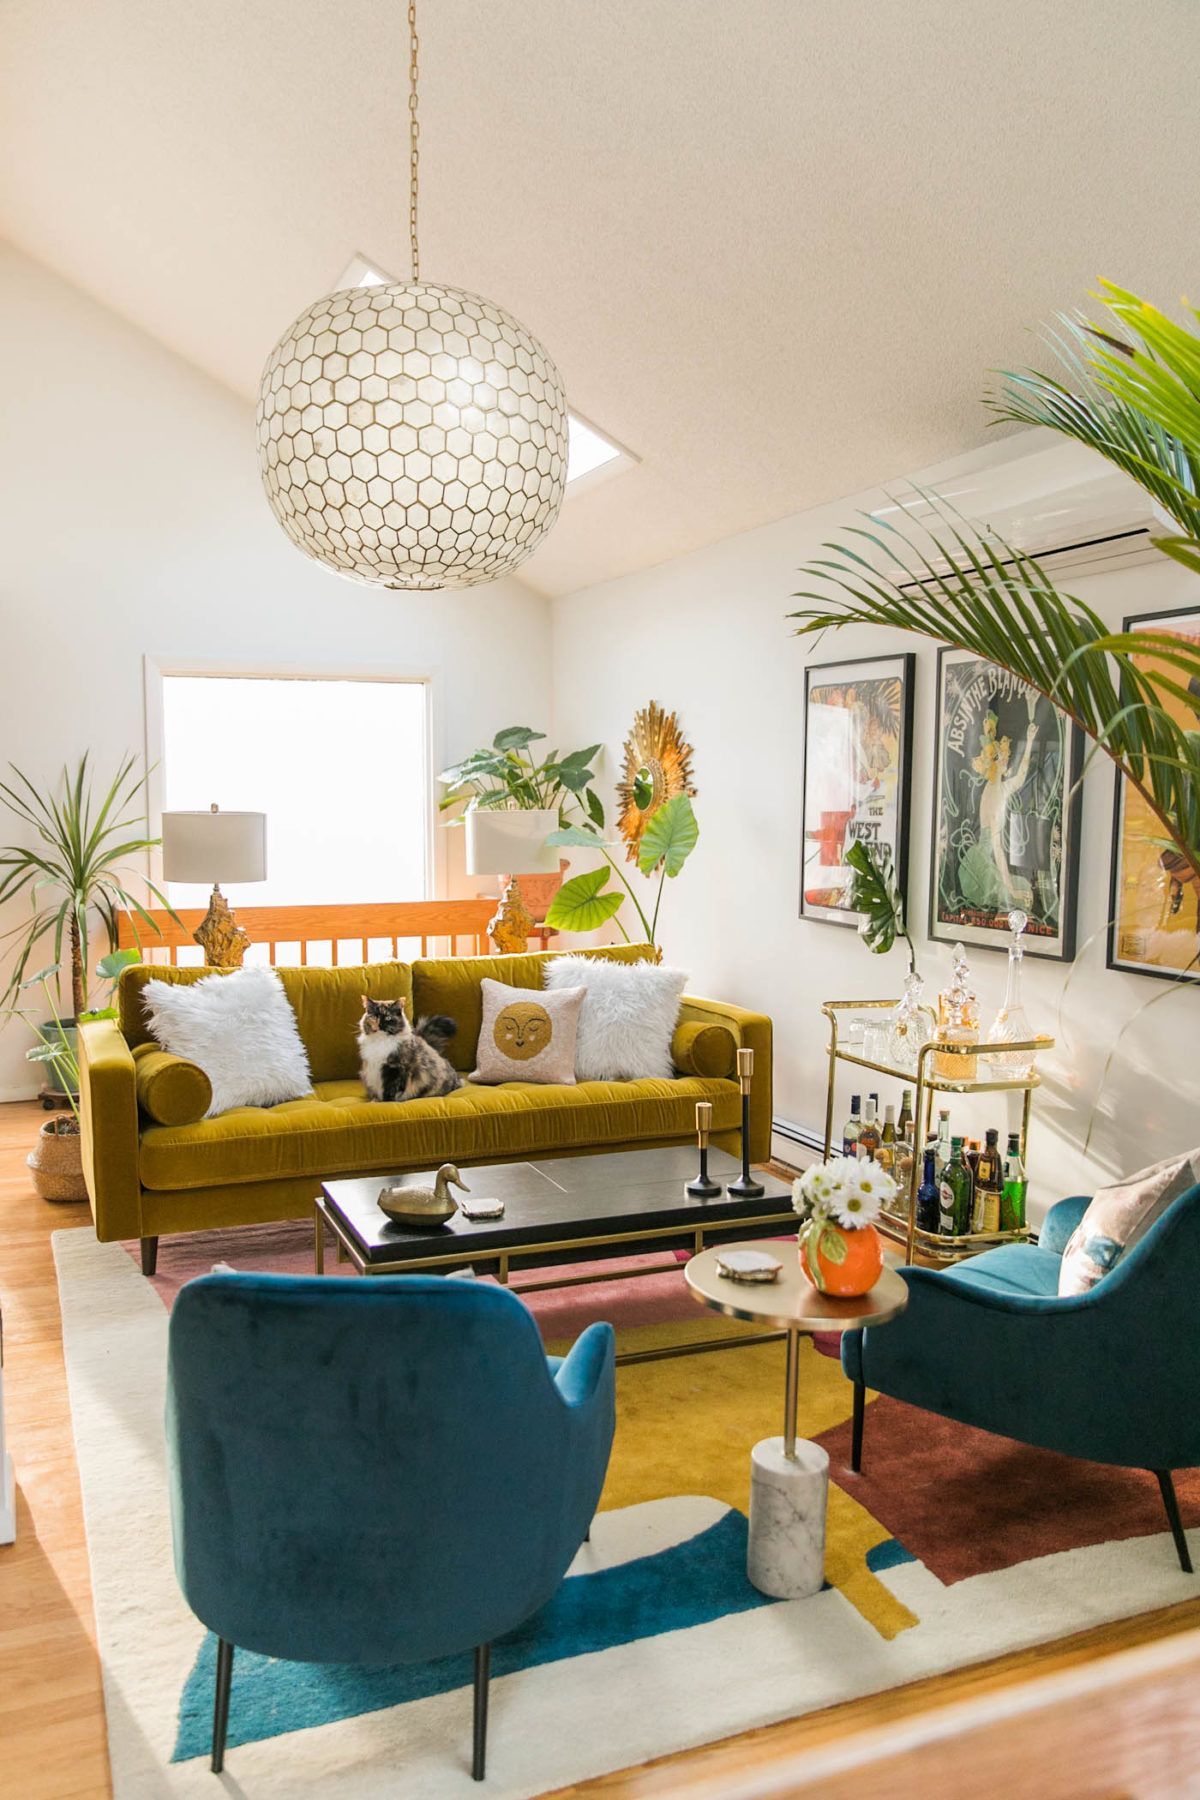 15 home accessories Living Room mid century ideas